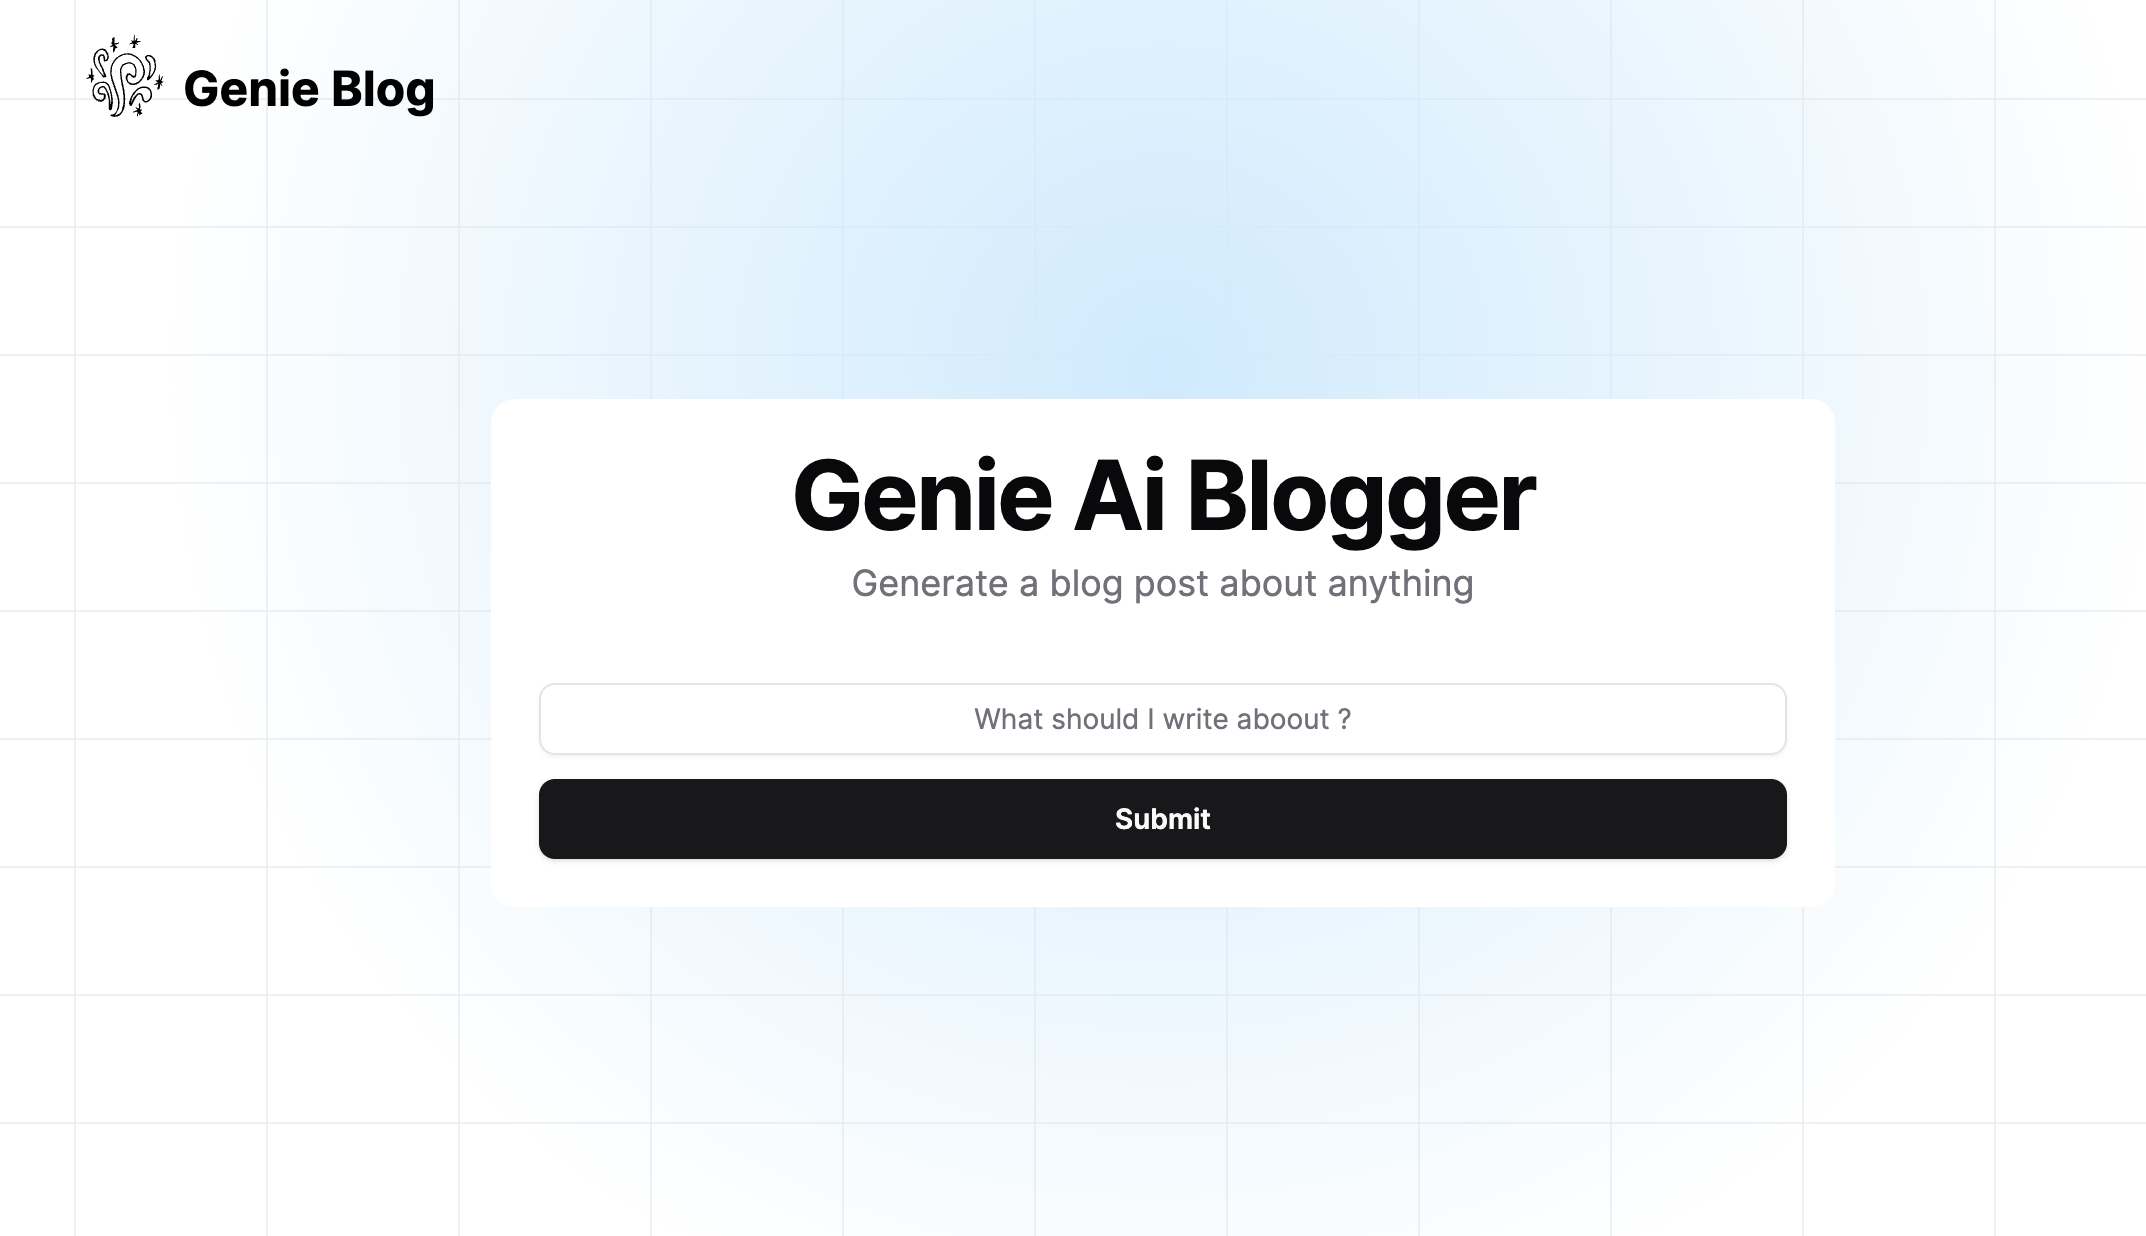 Genie Blog